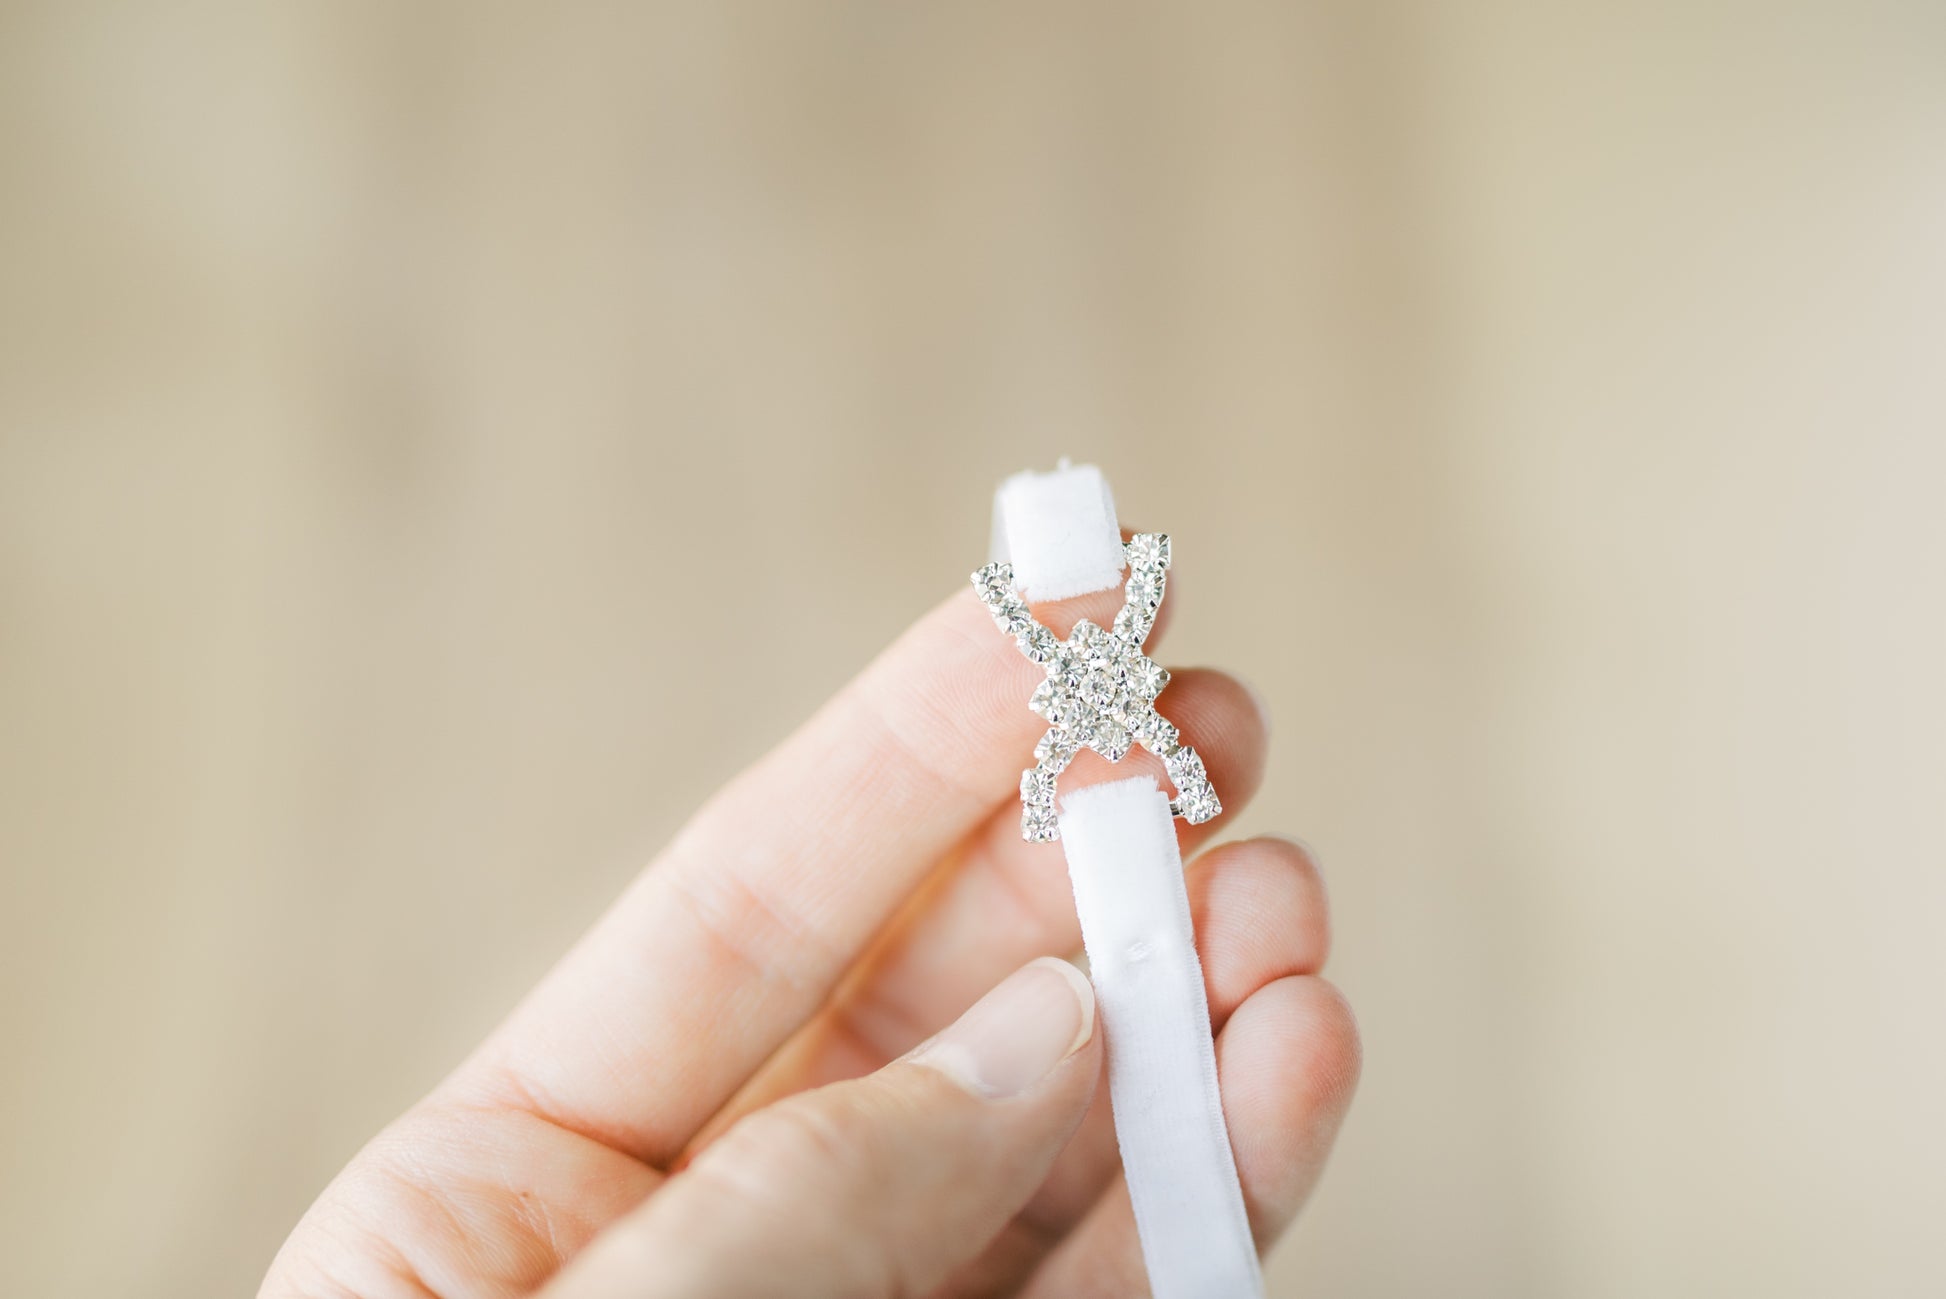 Petite Rhinestone Bridal Garter With White Stretch Lace